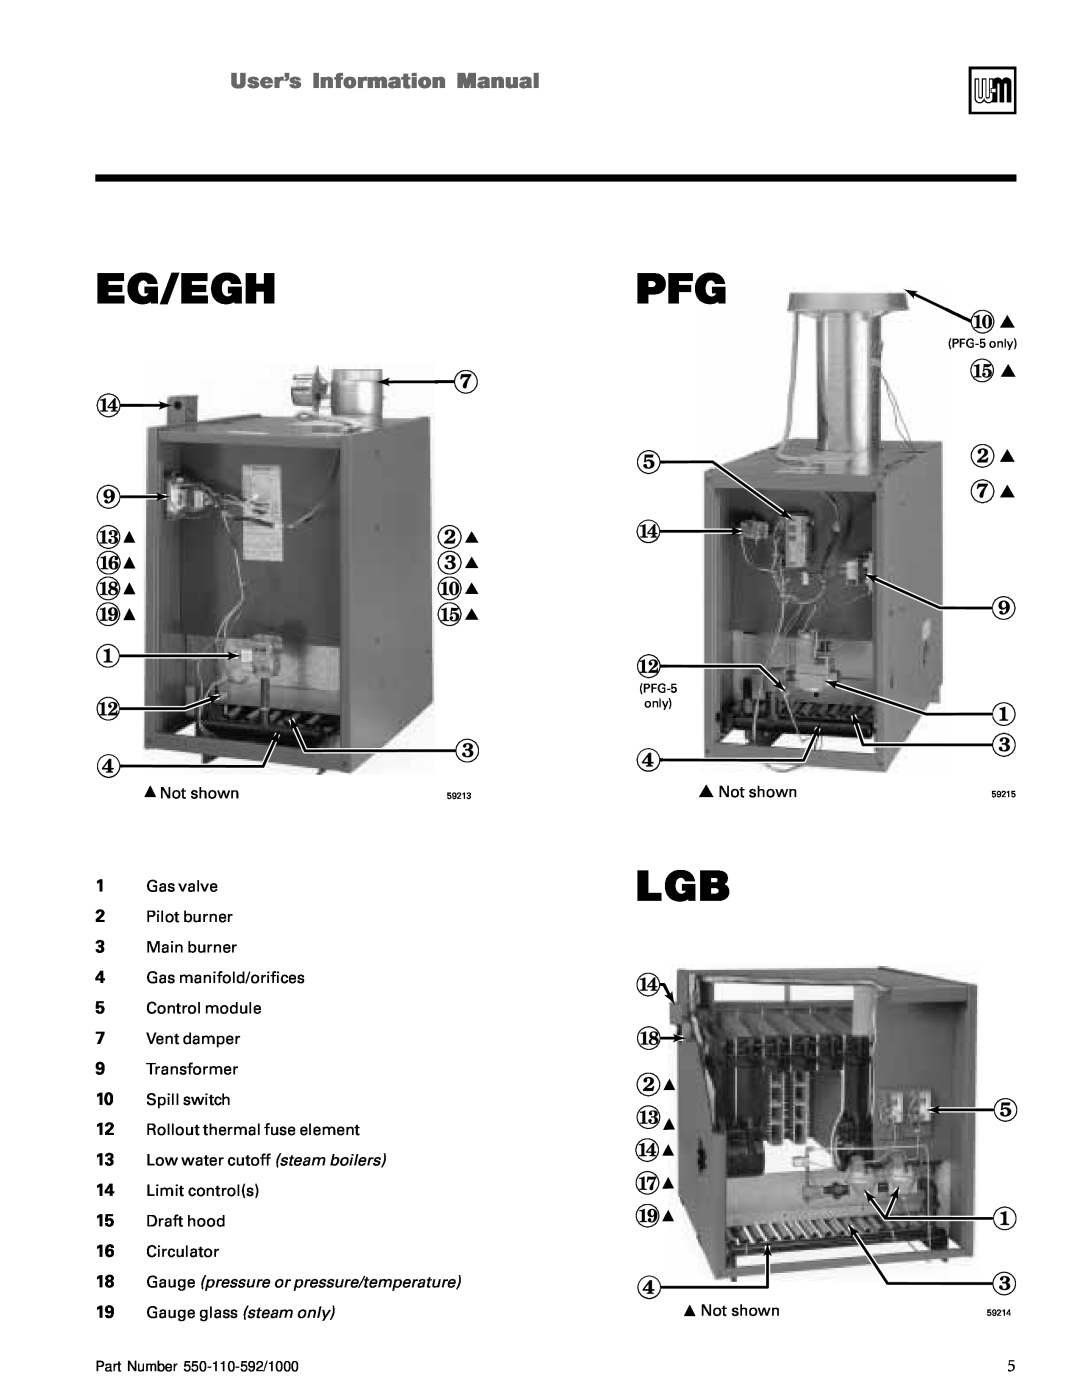 Weil-McLain PFG, PEG, CGs, CGi, LGB manual EG/EGHUserísInformationManual, 18Gauge pressure or pressure/temperature 